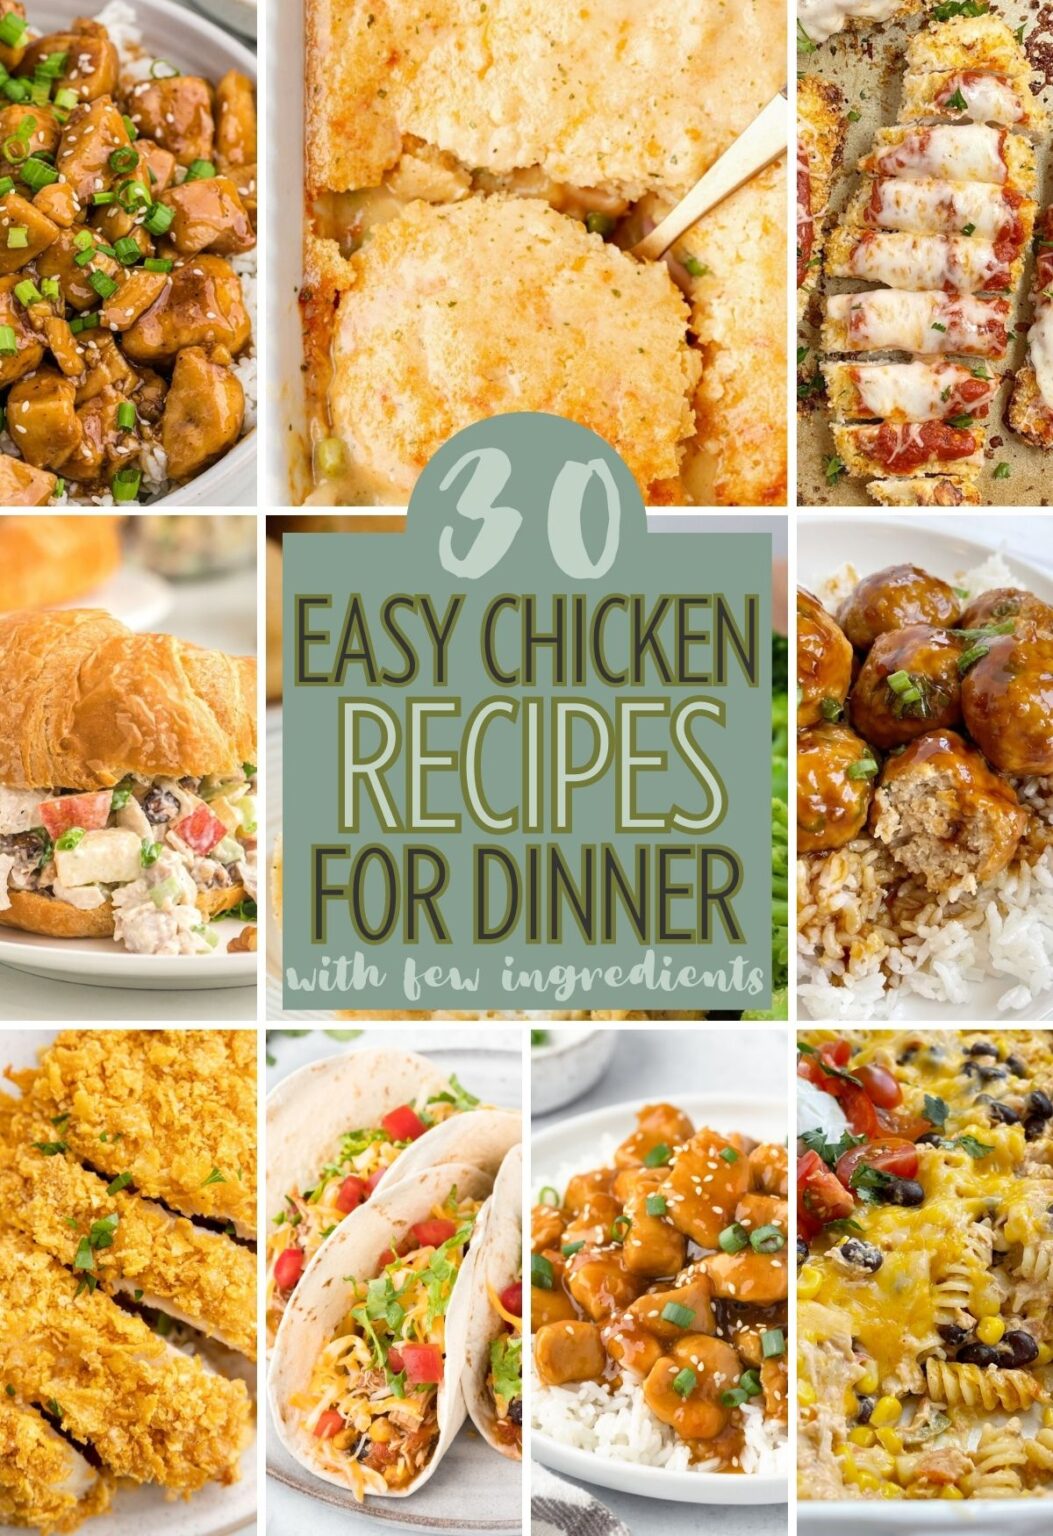 Easy Chicken Dinner Recipes Round Up Vertical 1053x1536 